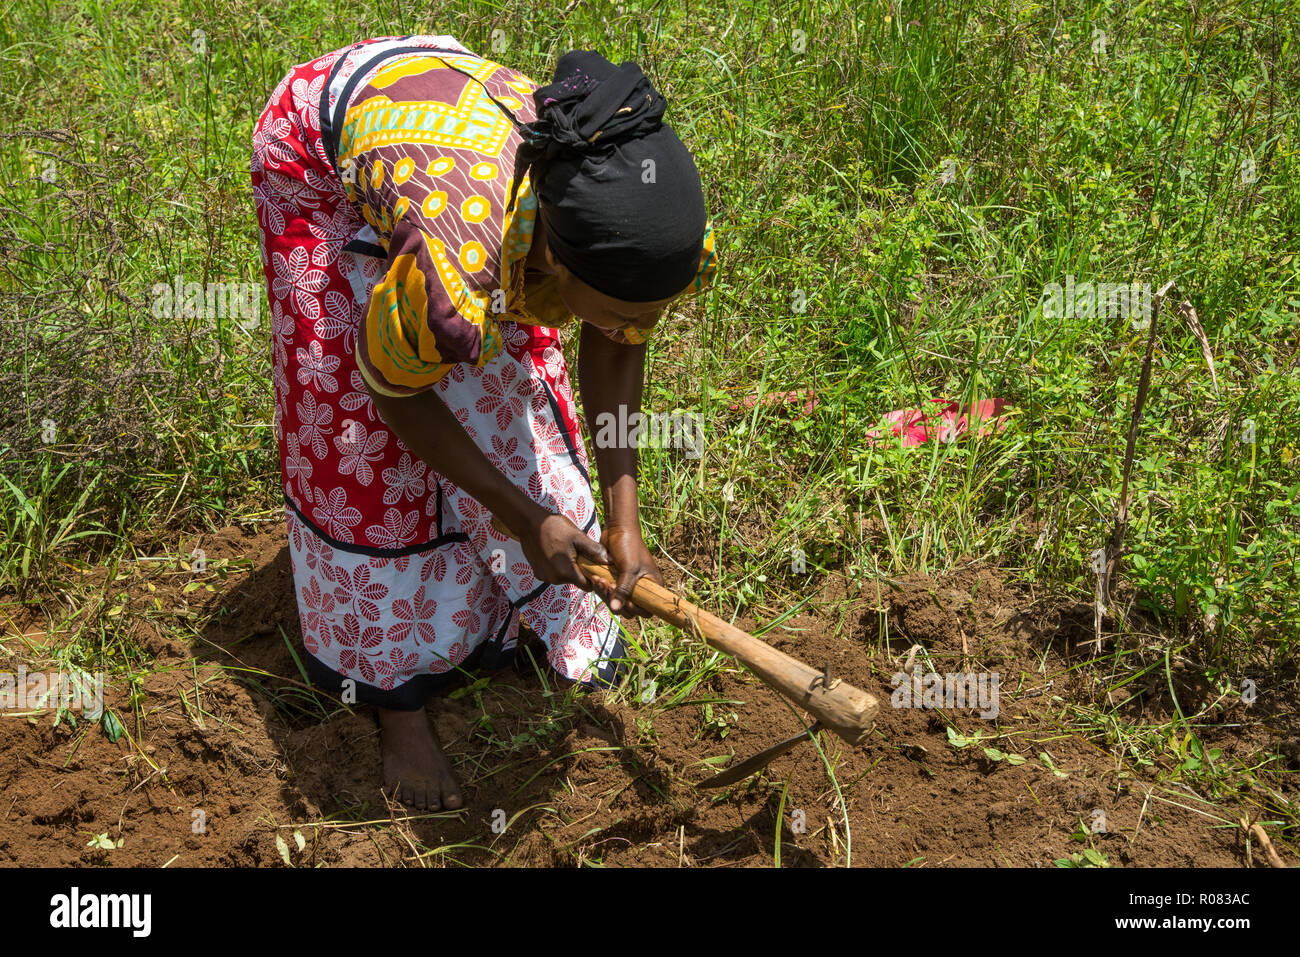 woman working in the field in Kenya Stock Photo